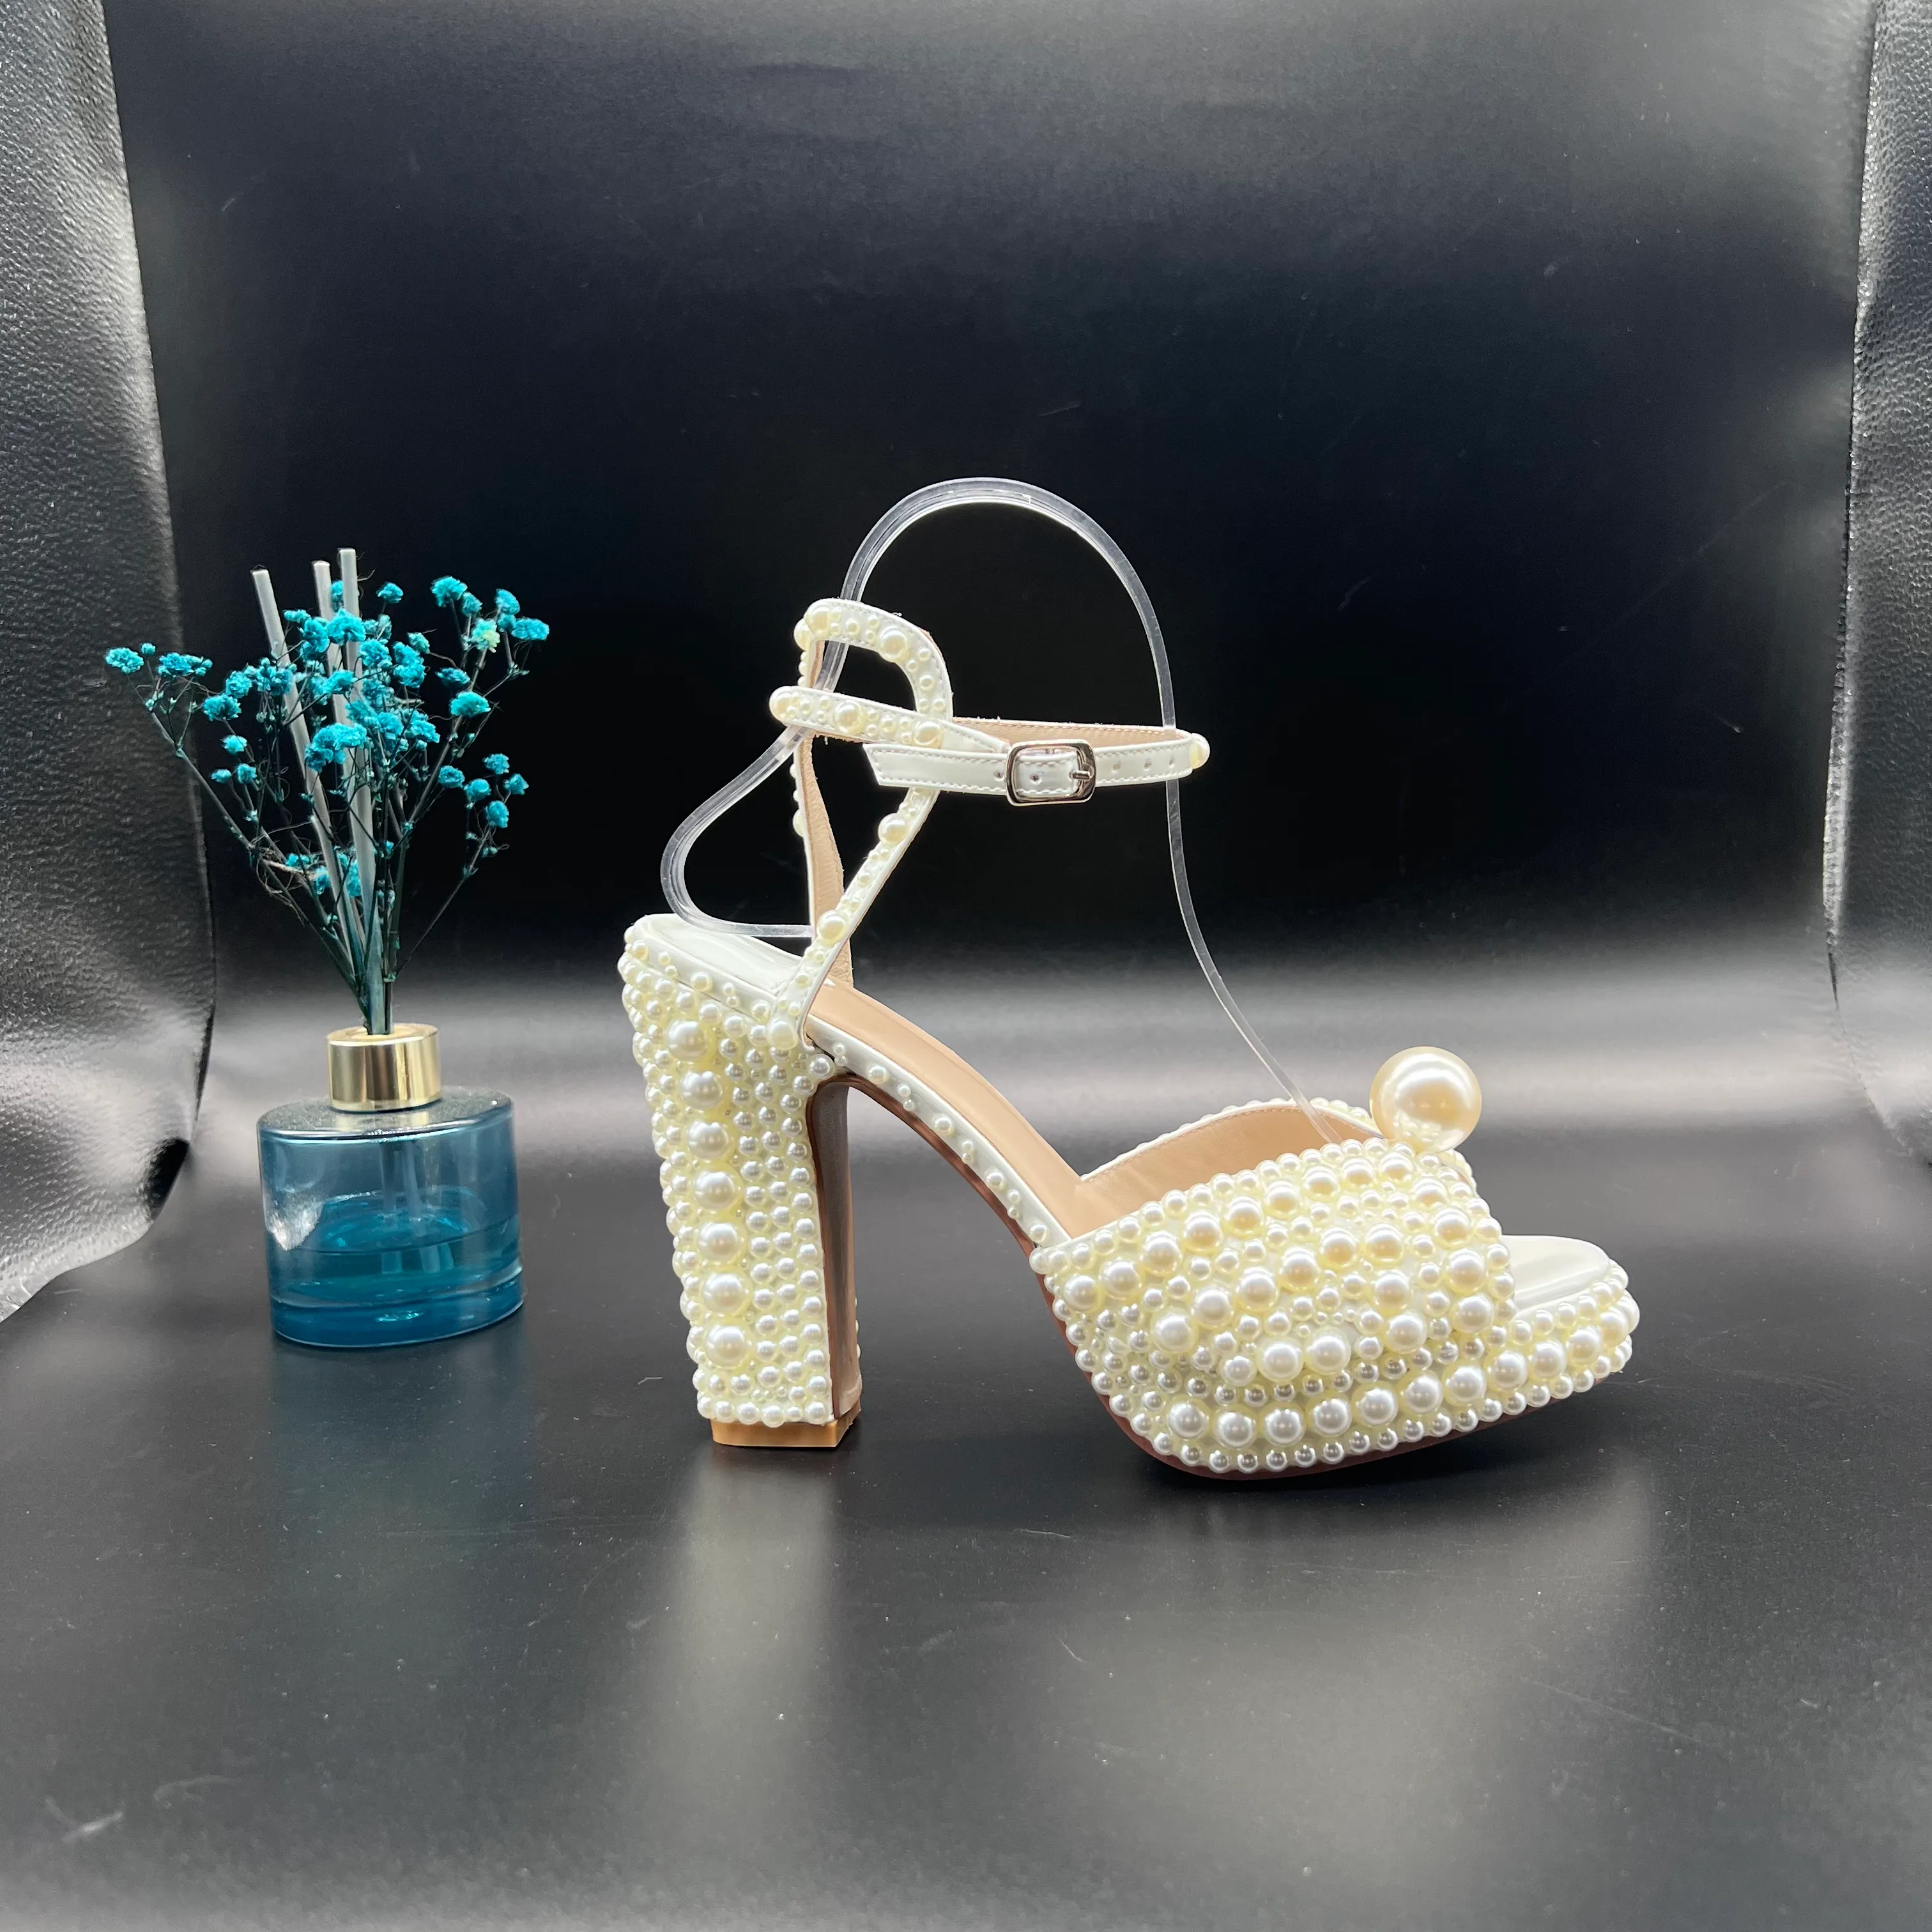 DIY Pearl Embellished Slippers - Glitter, Inc.